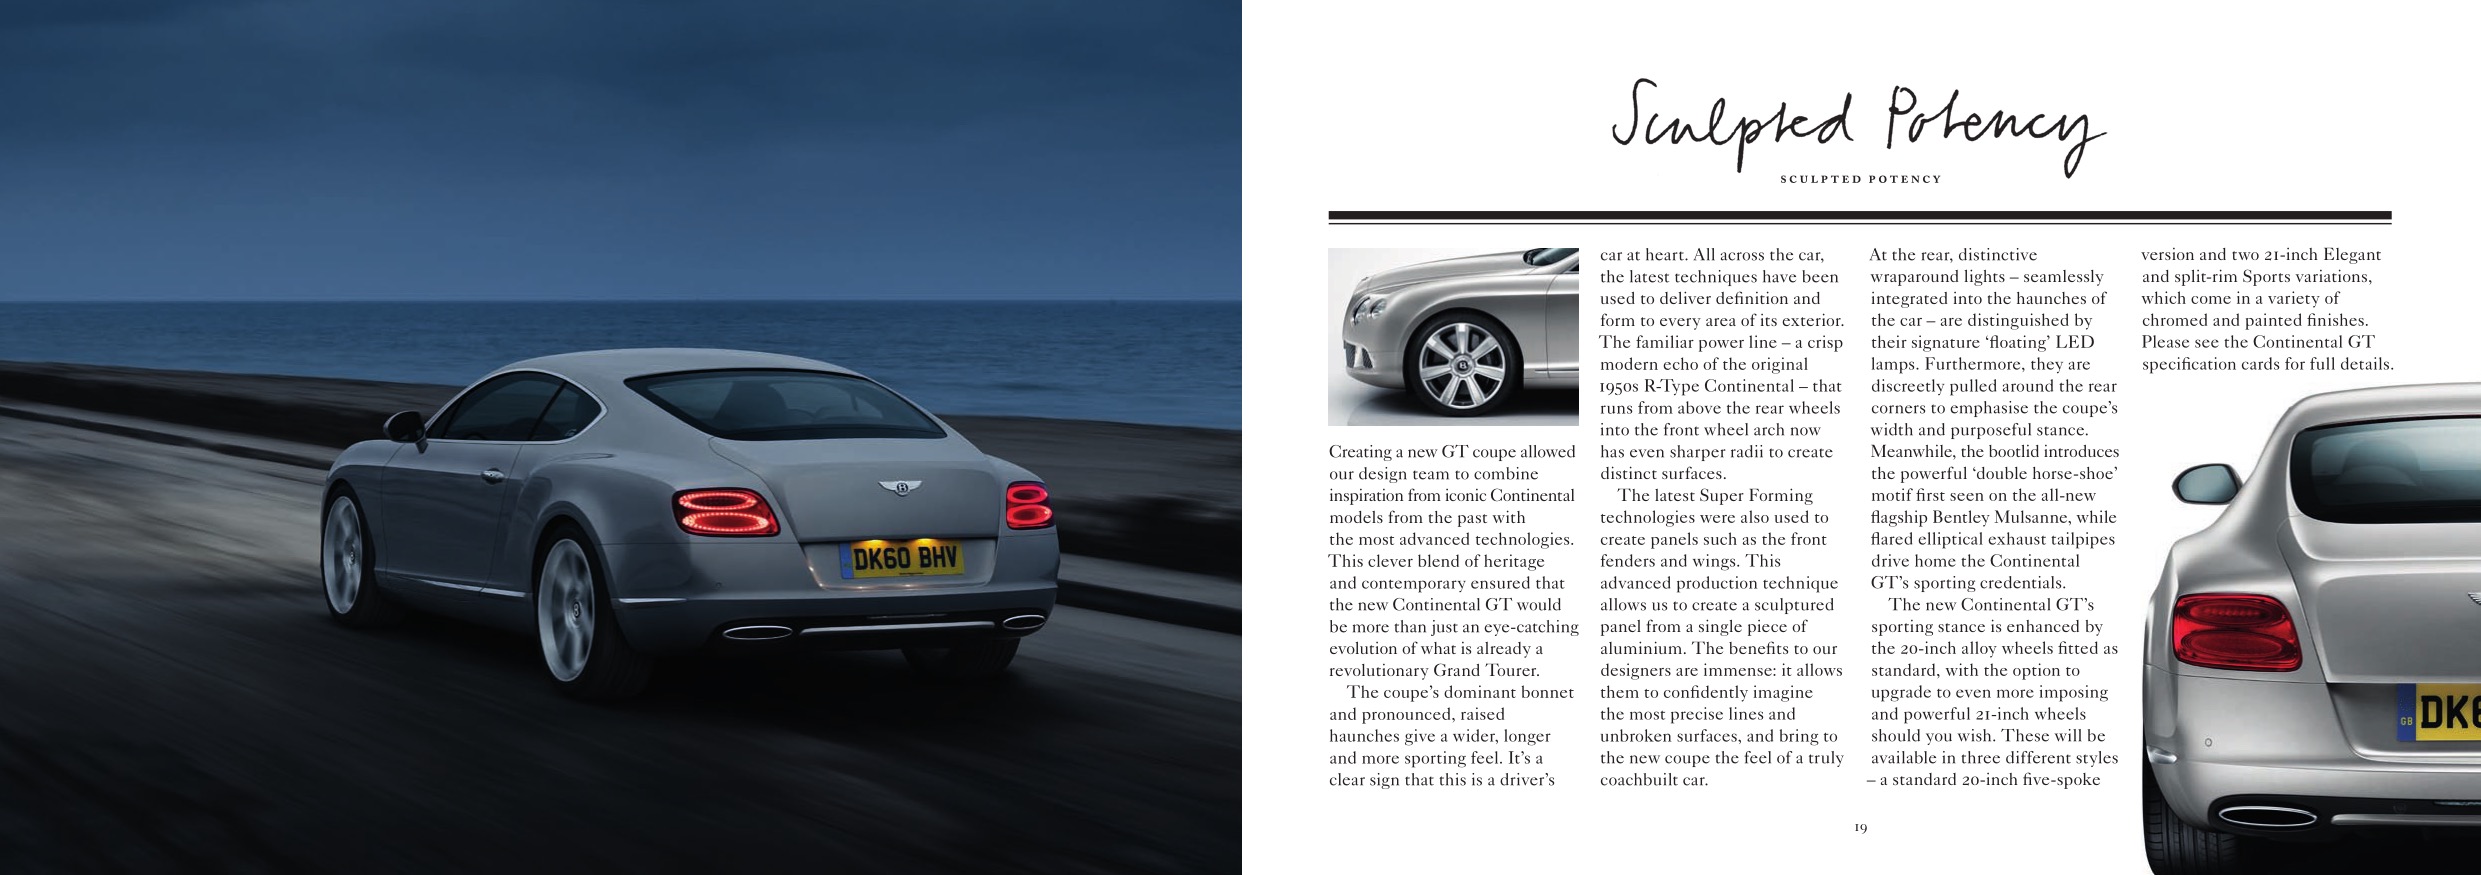 2011 Bentley Continental GT Brochure Page 6